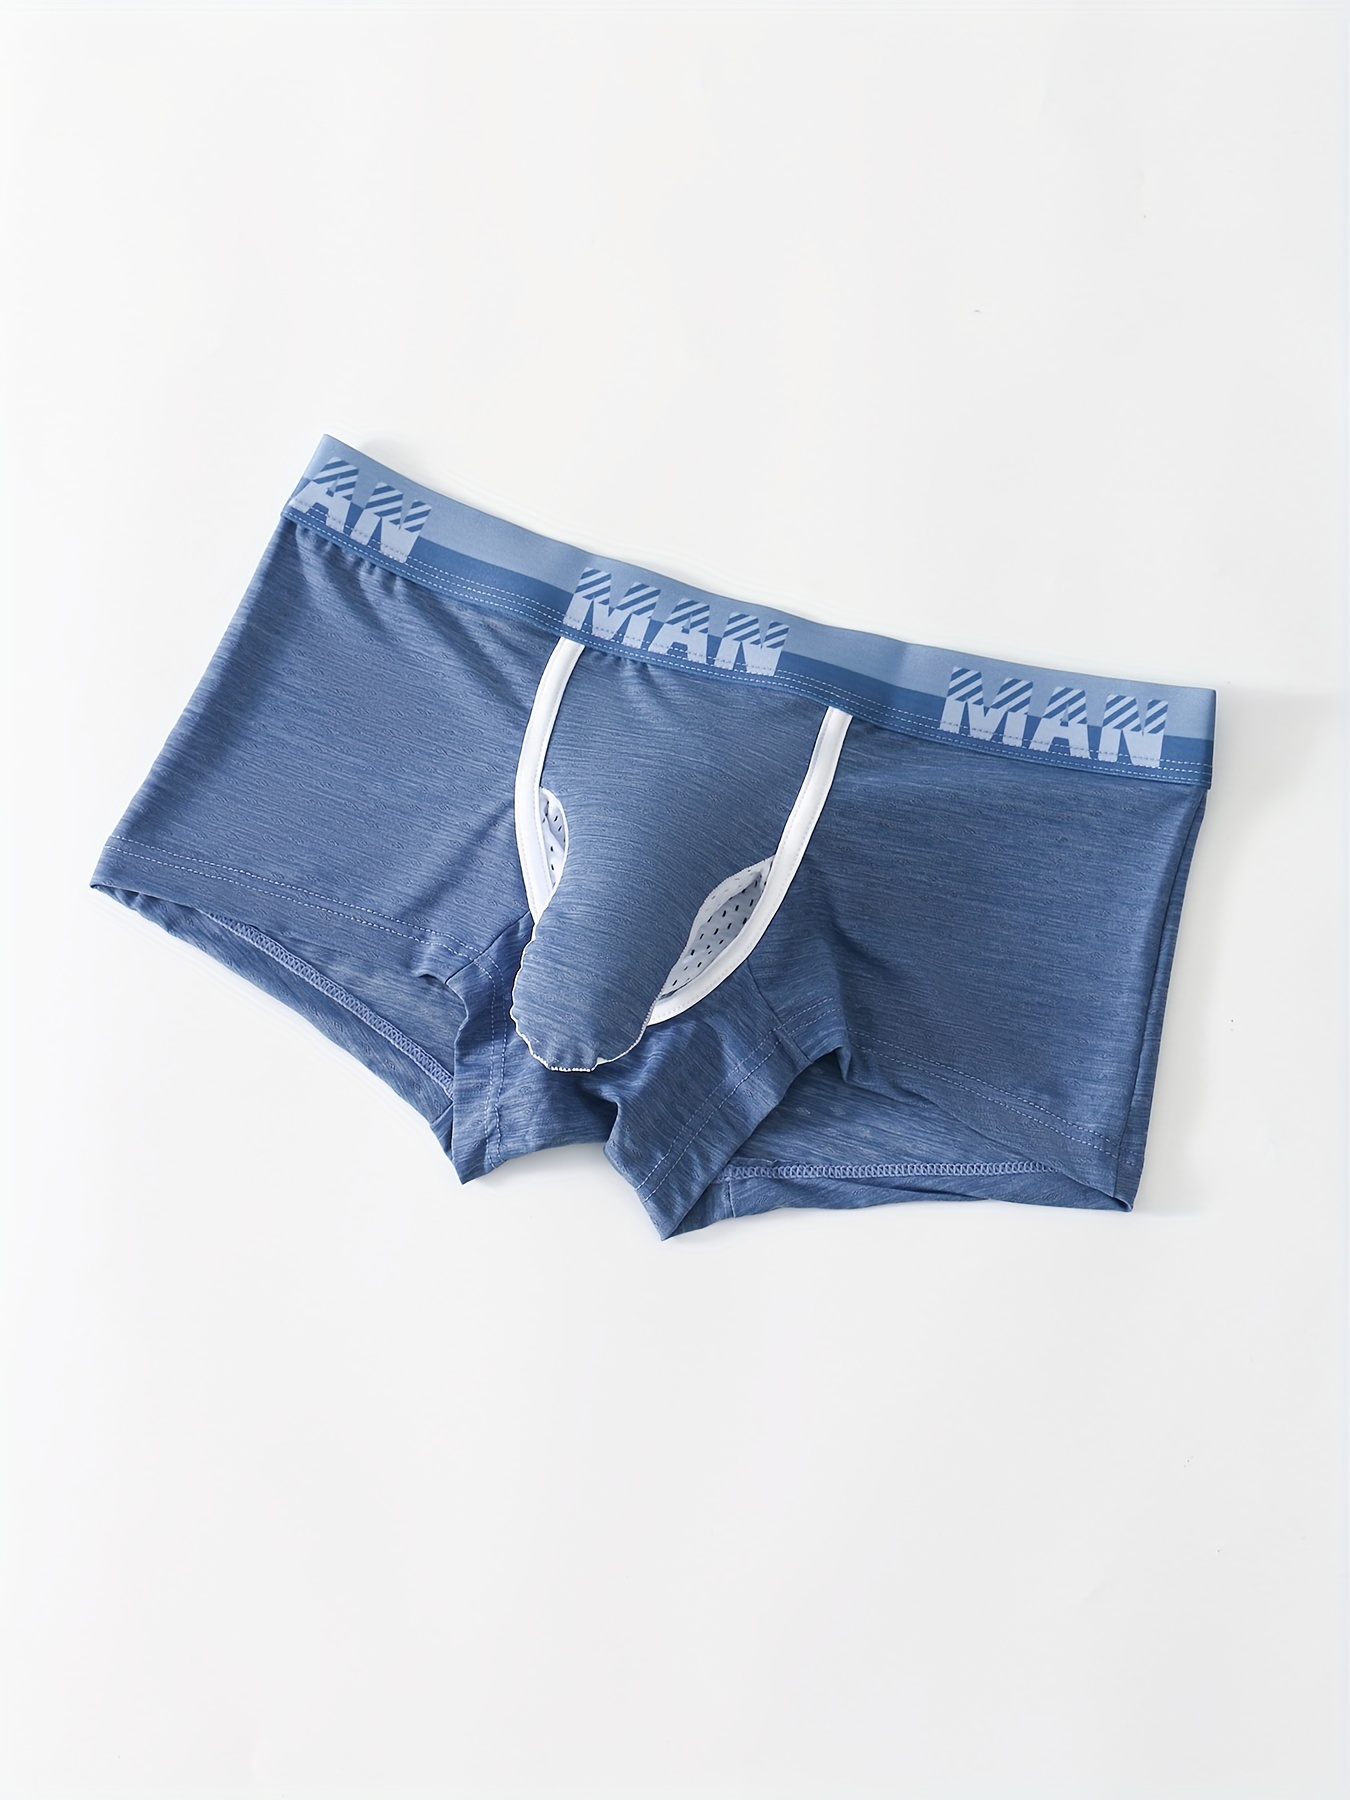 Qoo10 - Men Underwear Trunk with elephant trunk JJ pocket M024 : Men's  Clothing